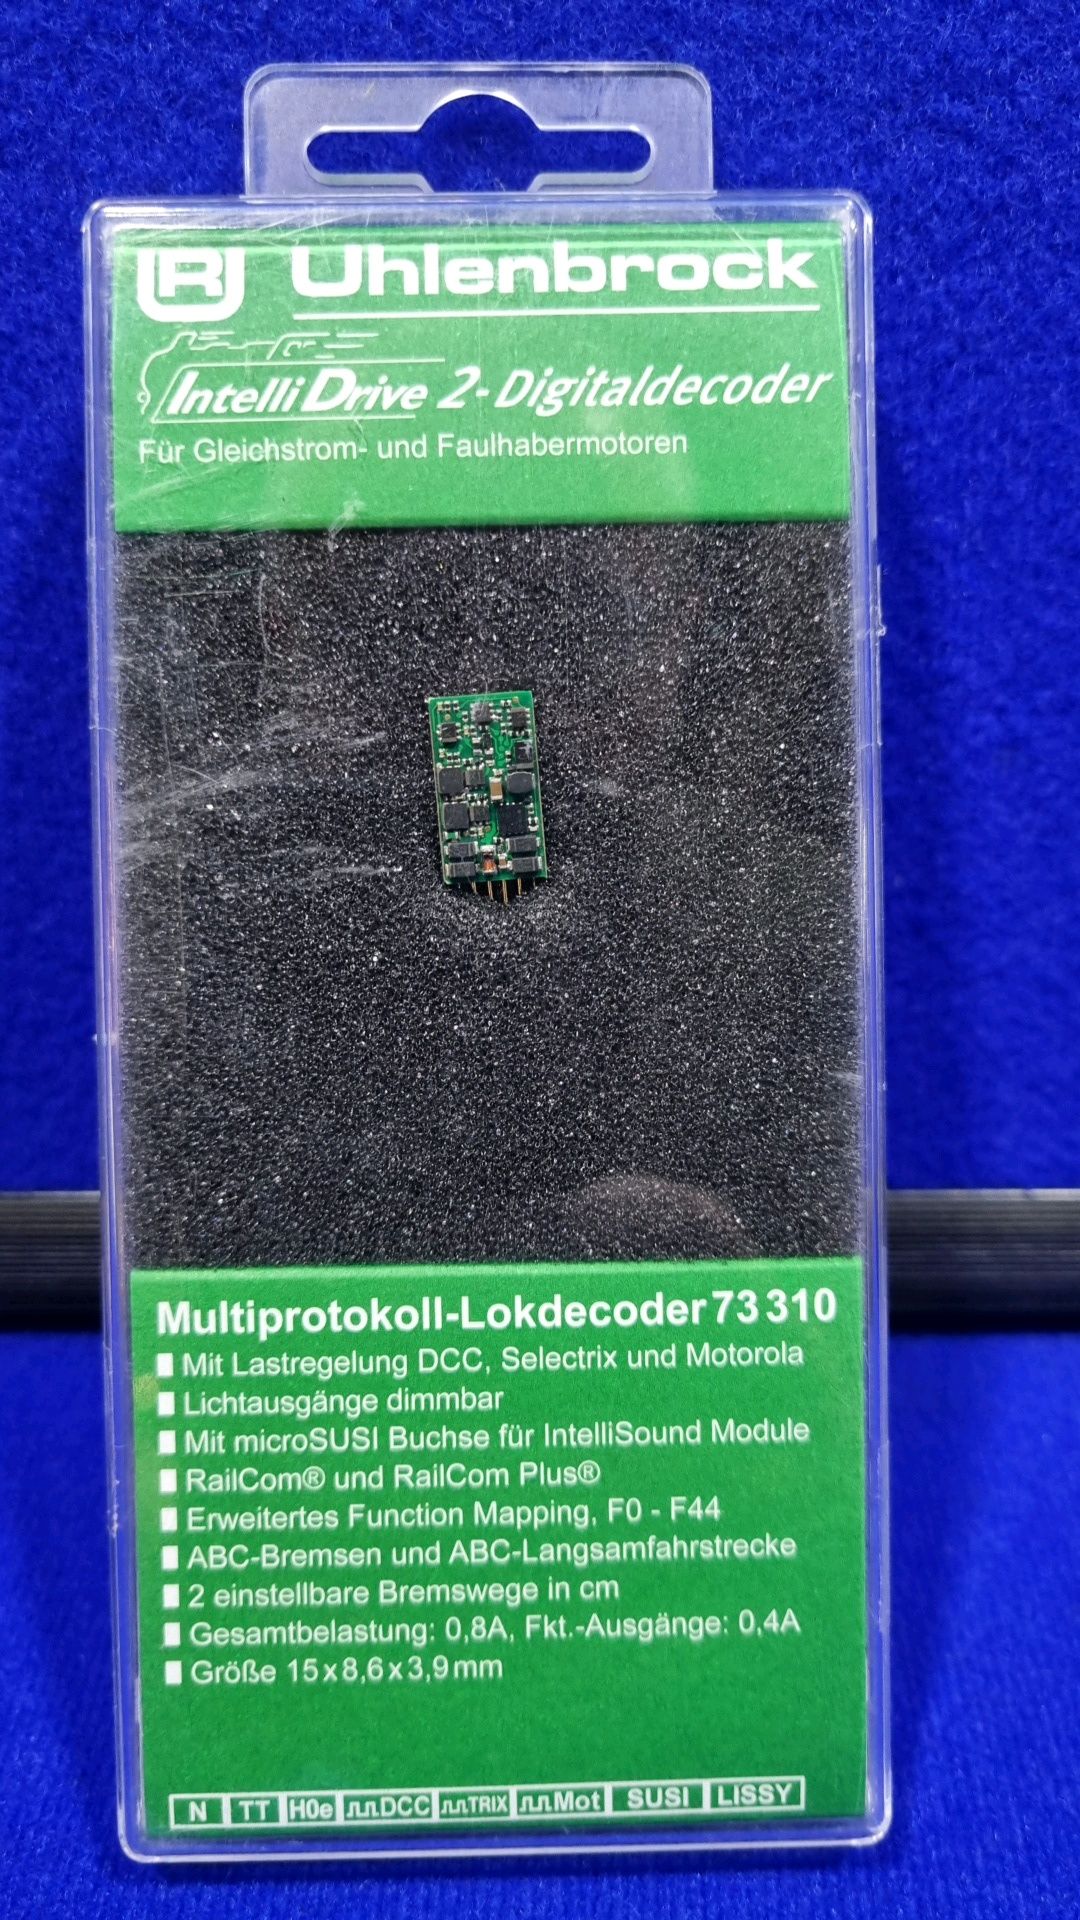 1 x Uhlenbrook Intellidrive Digital decoder 73310/Till66032 - Image 3 of 3